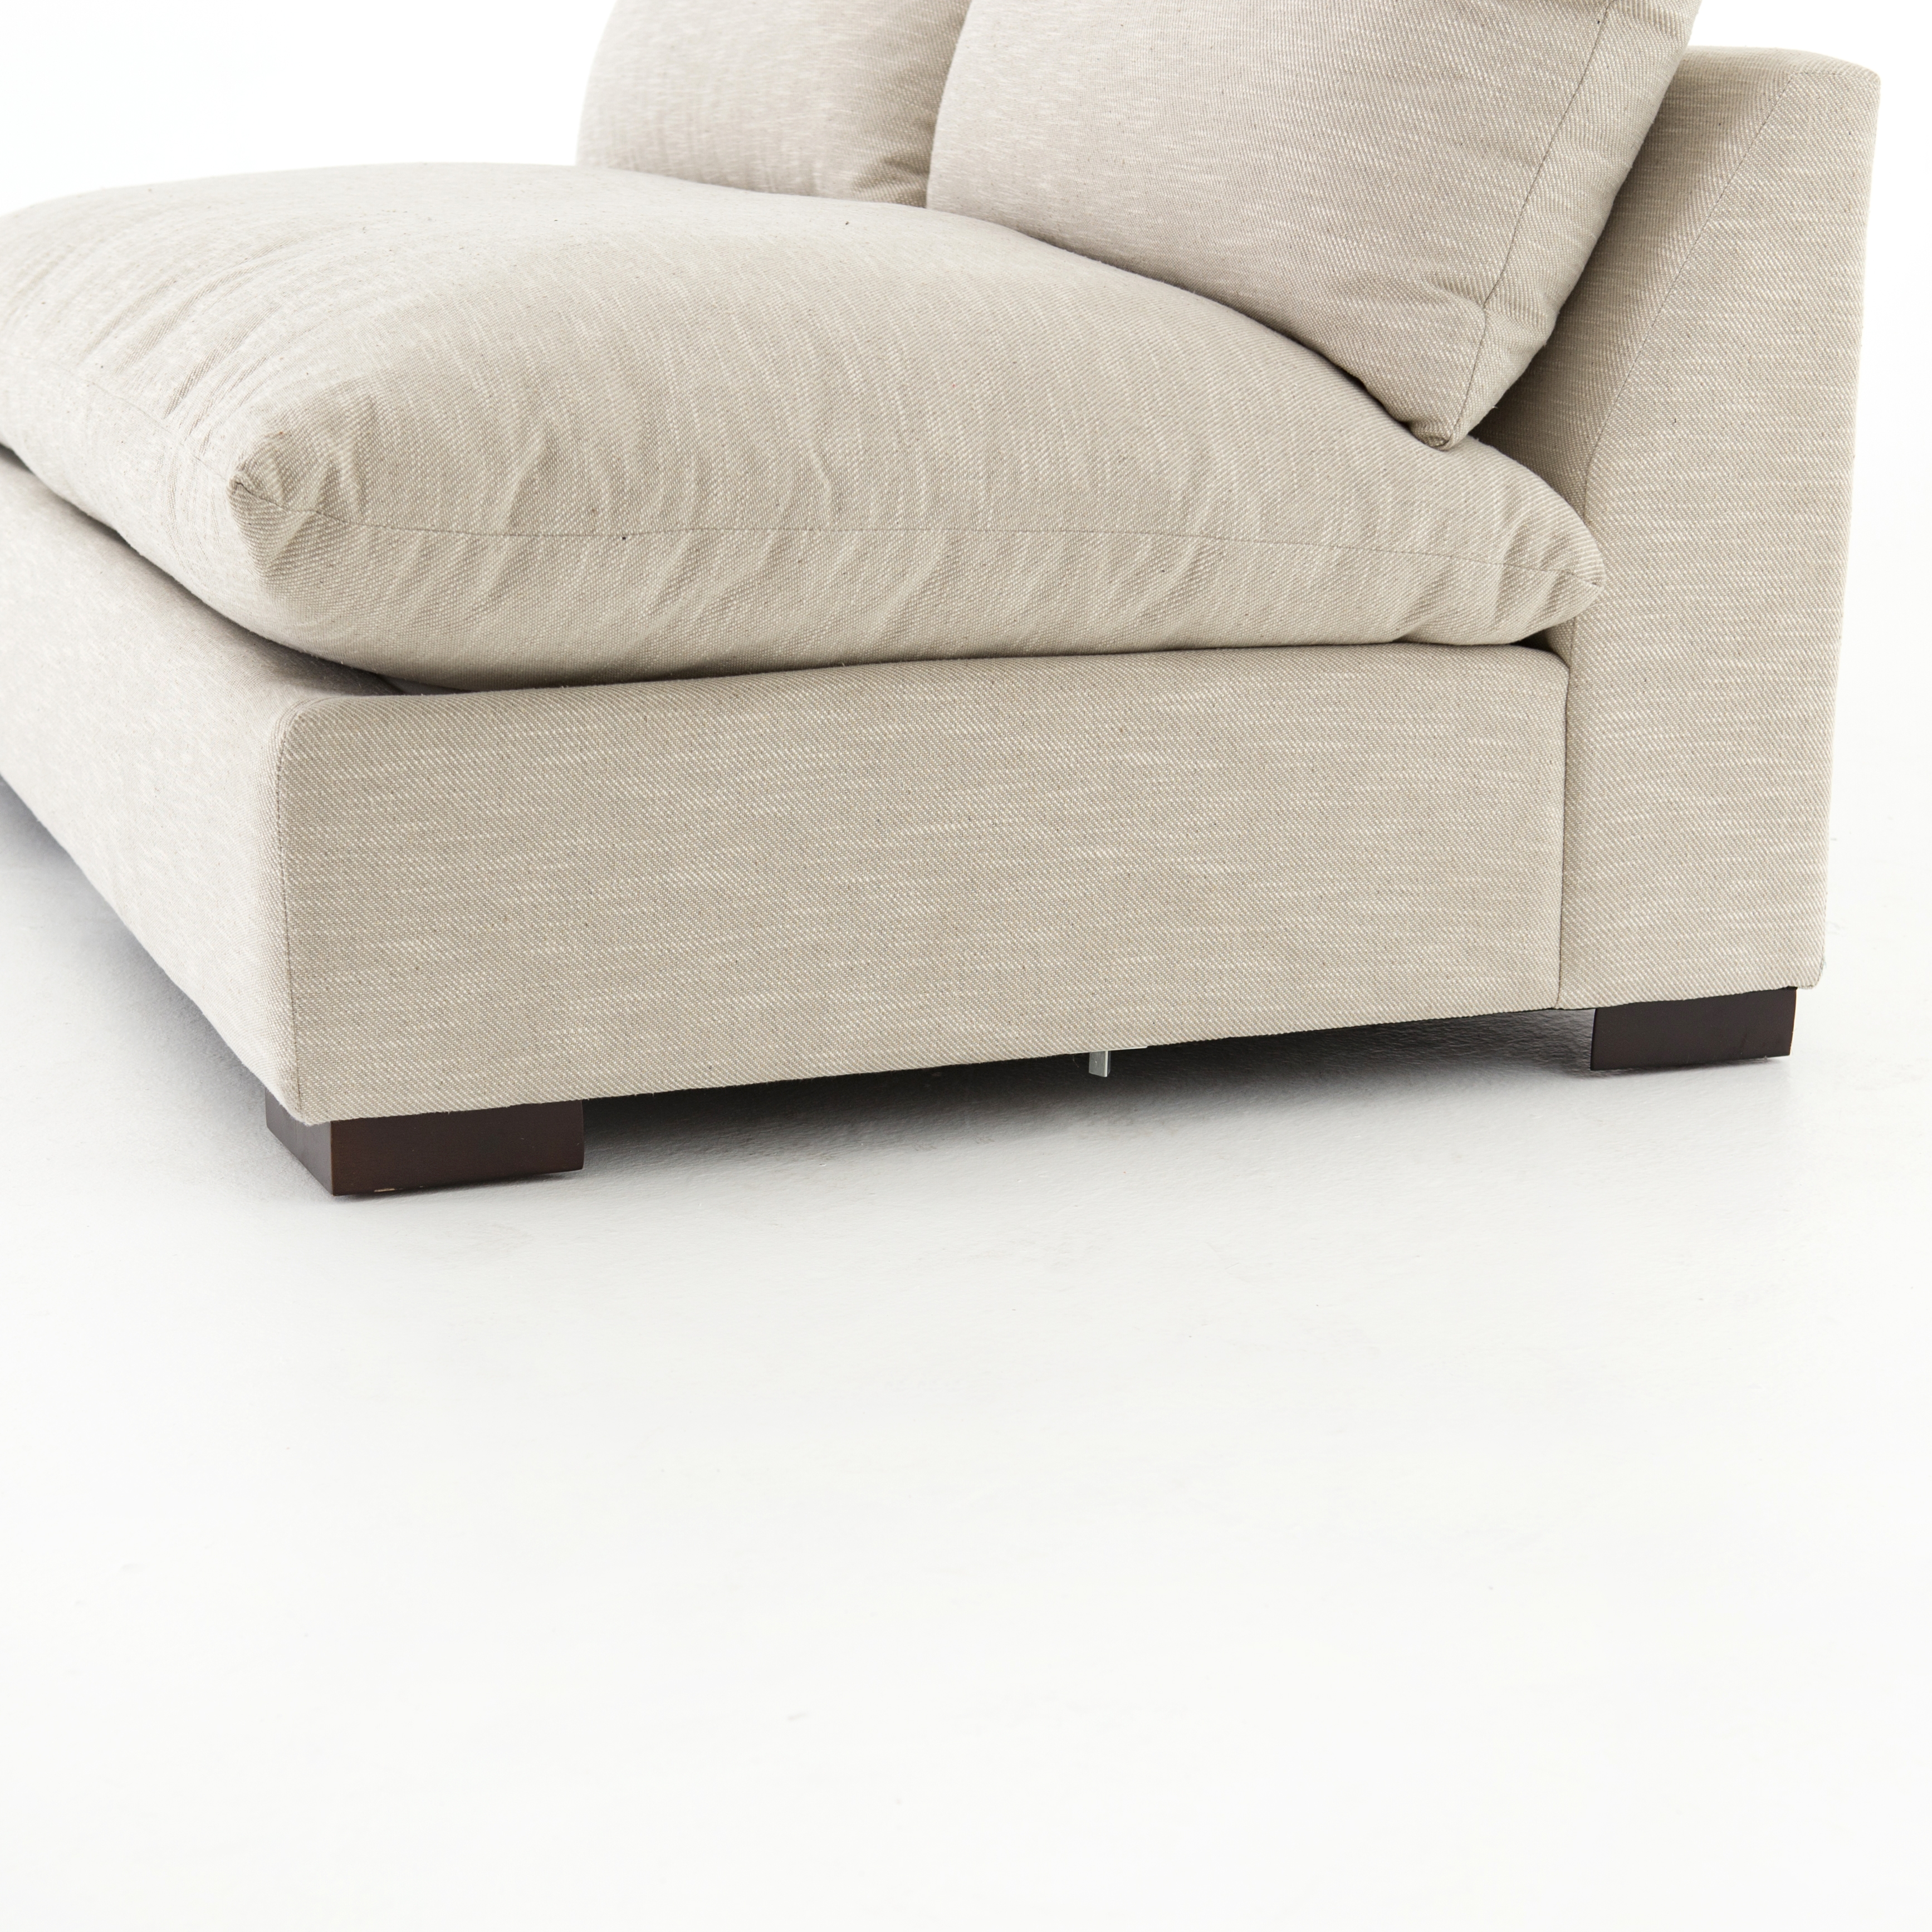 Decima Sectional Sofa - Image 7